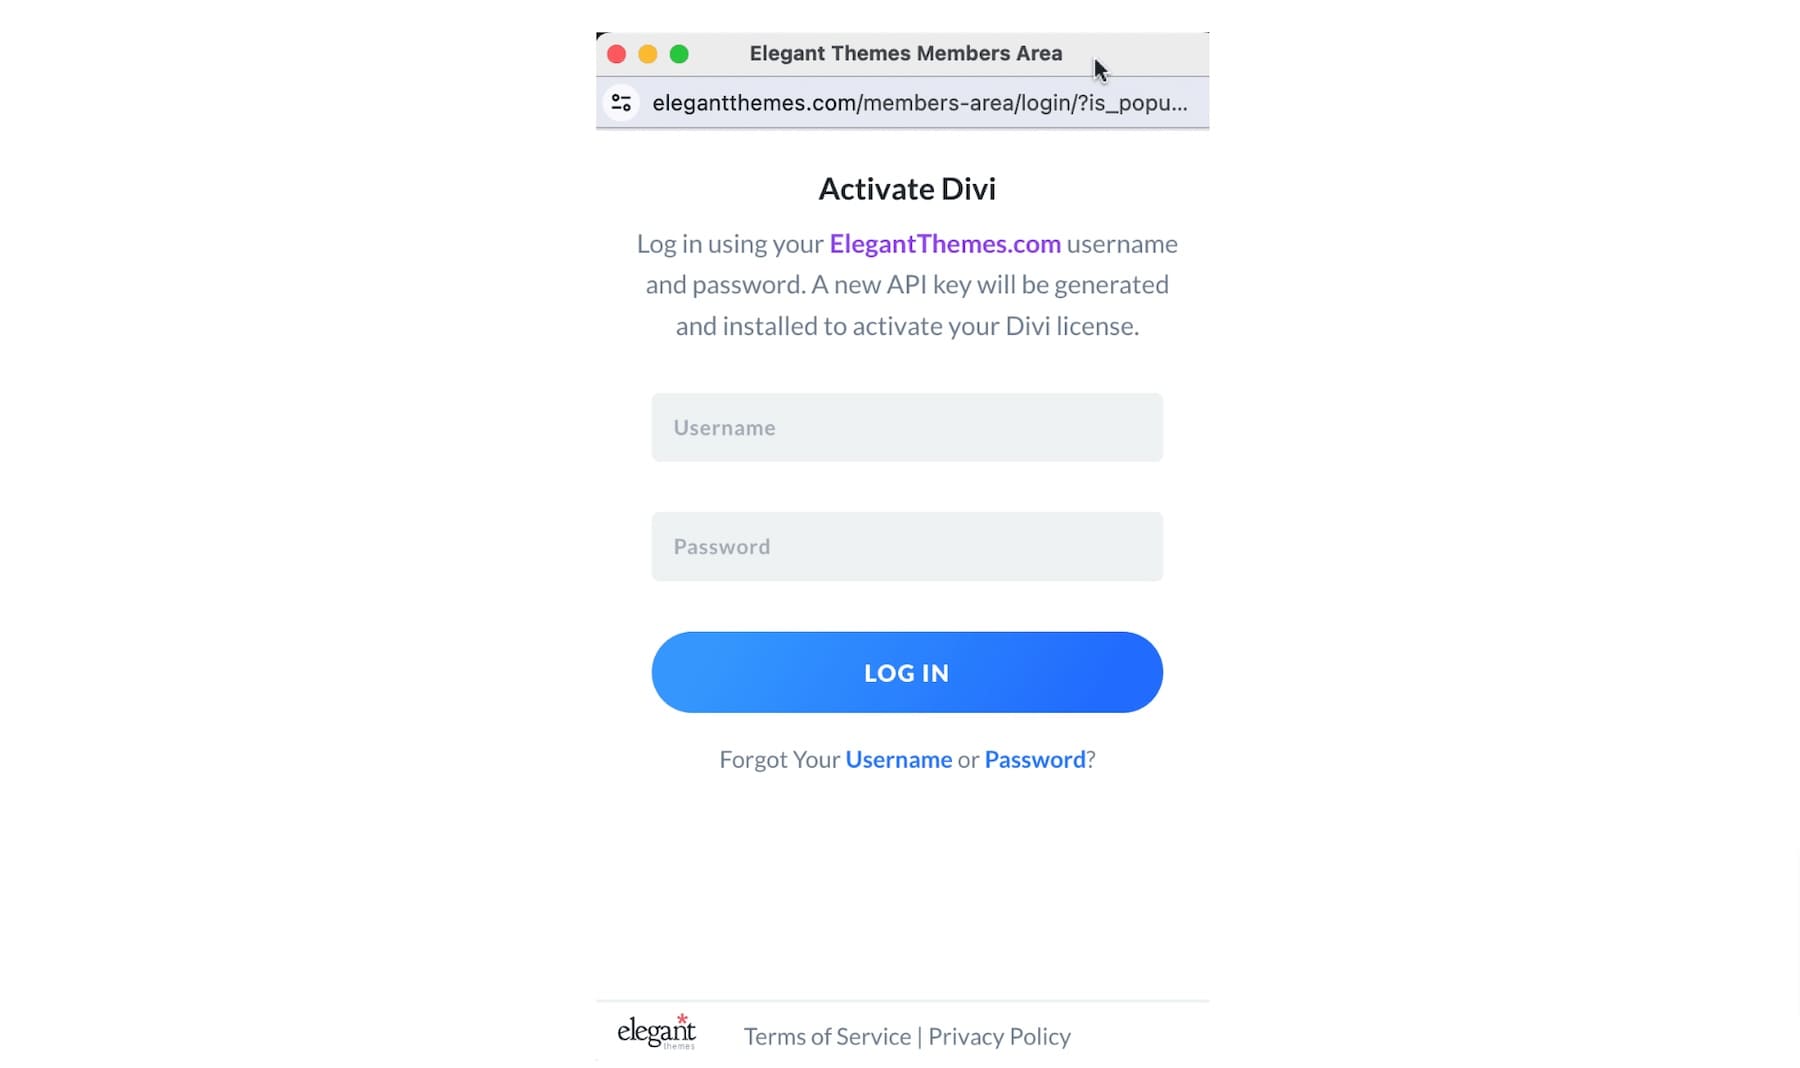 divi login details to activate license